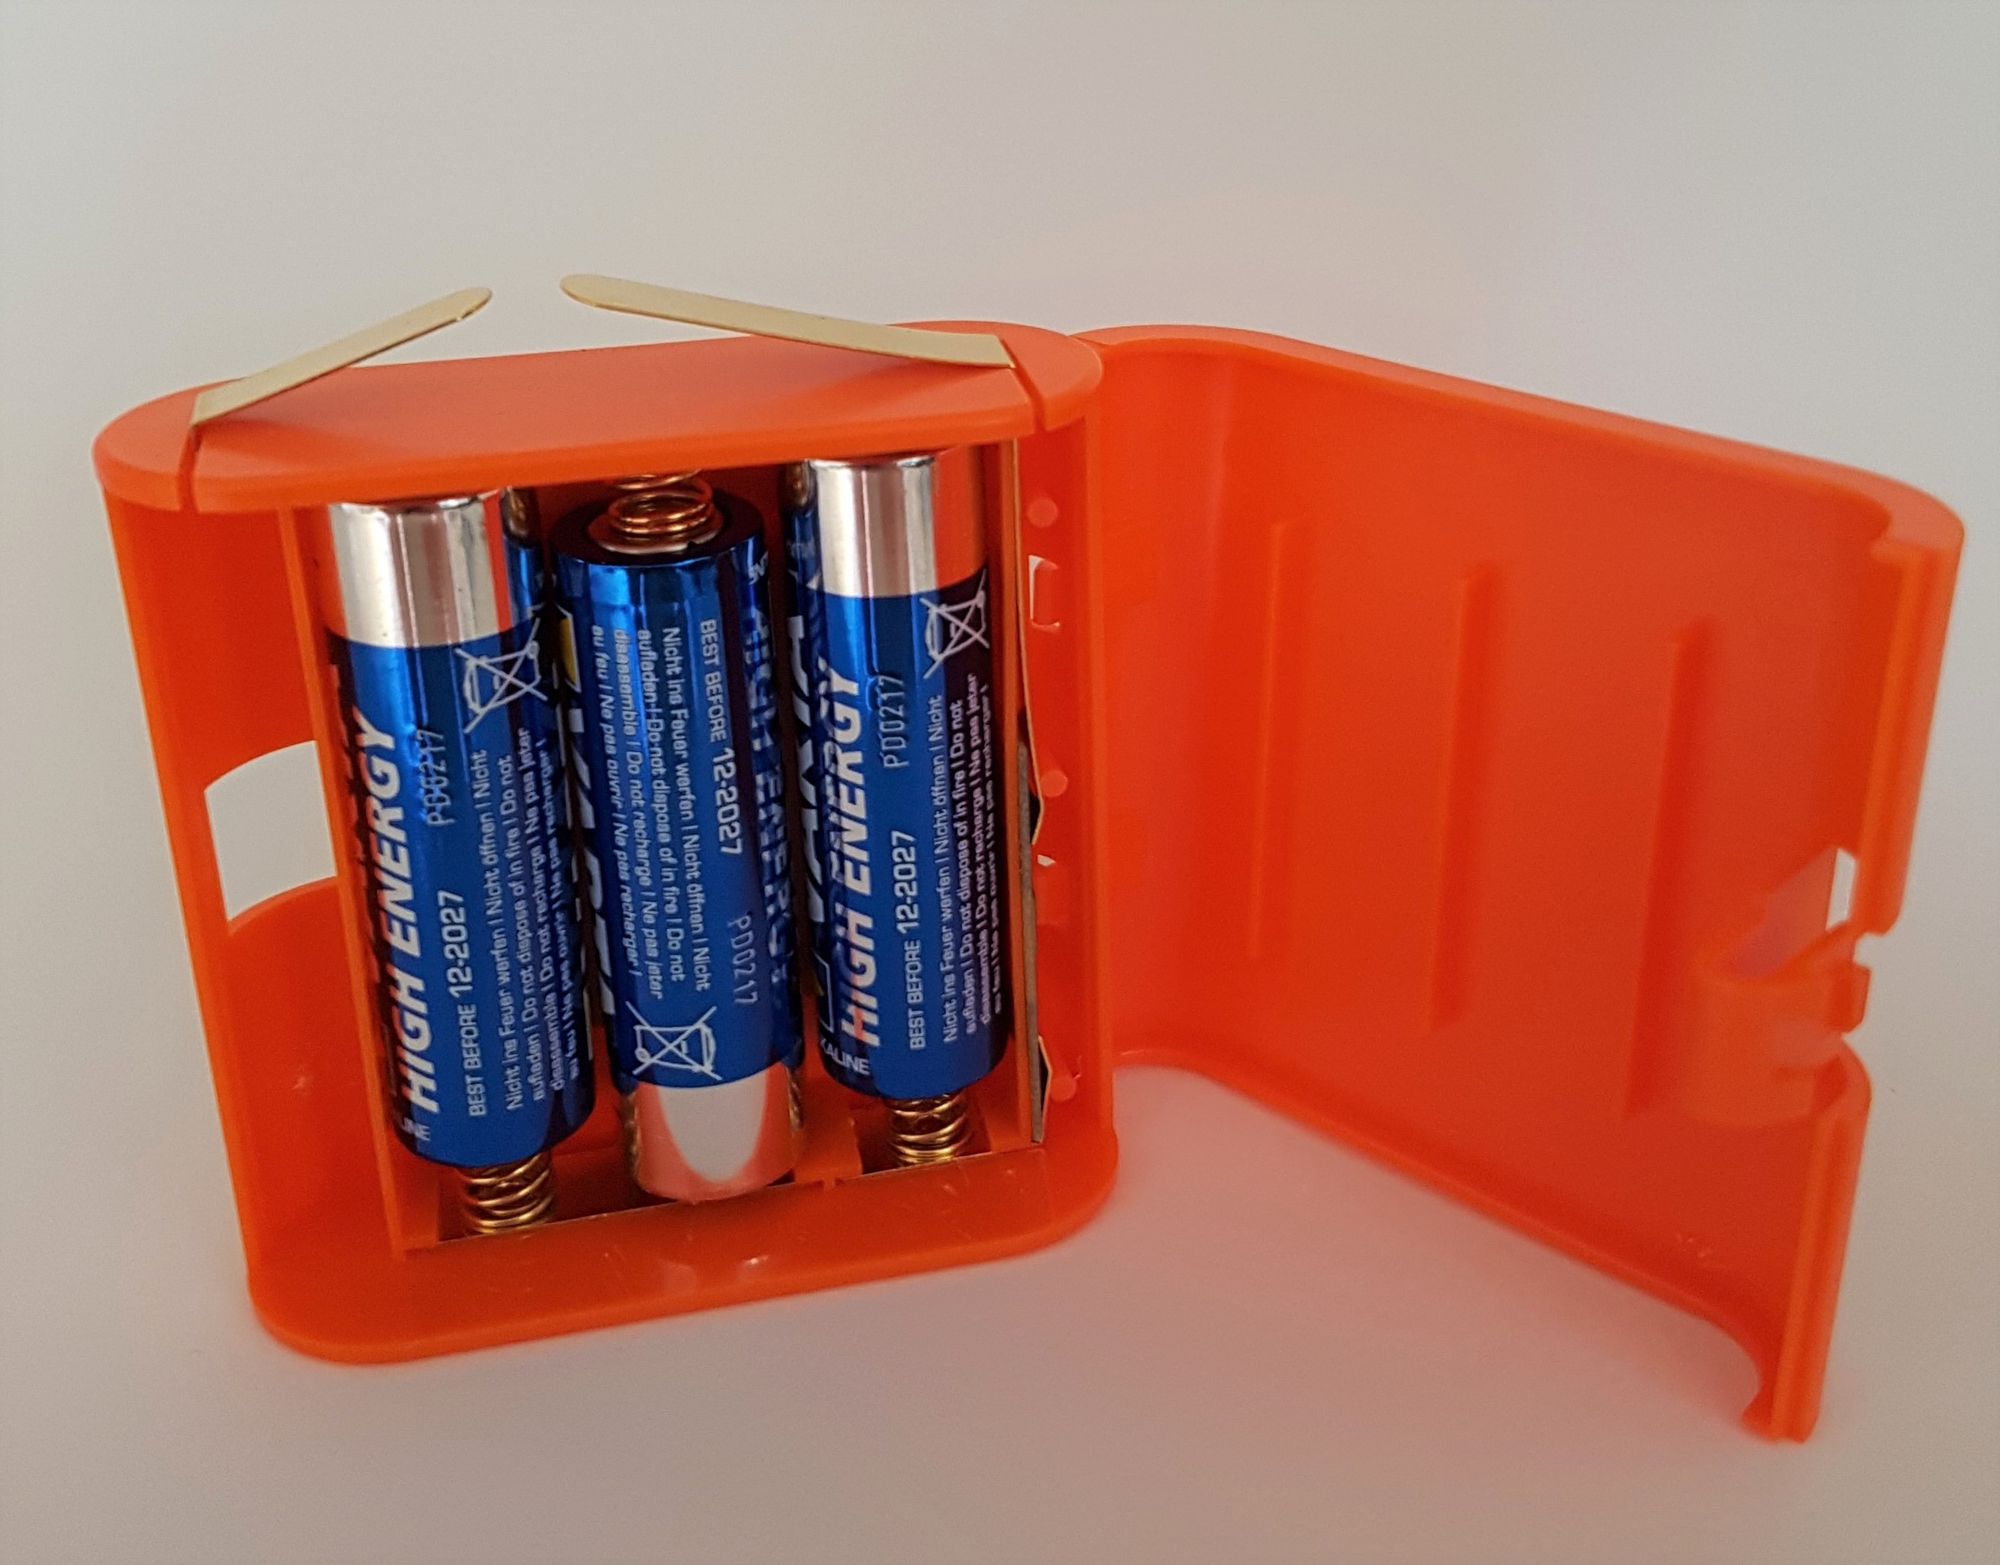 Batteriehalter 4,5 Volt, Flachbatterie (kurzschlussfest)   Forscherladen.com - forschen, entdecken, verstehen: Schulbedarf,  Lernspielzeug, Lehrmittel